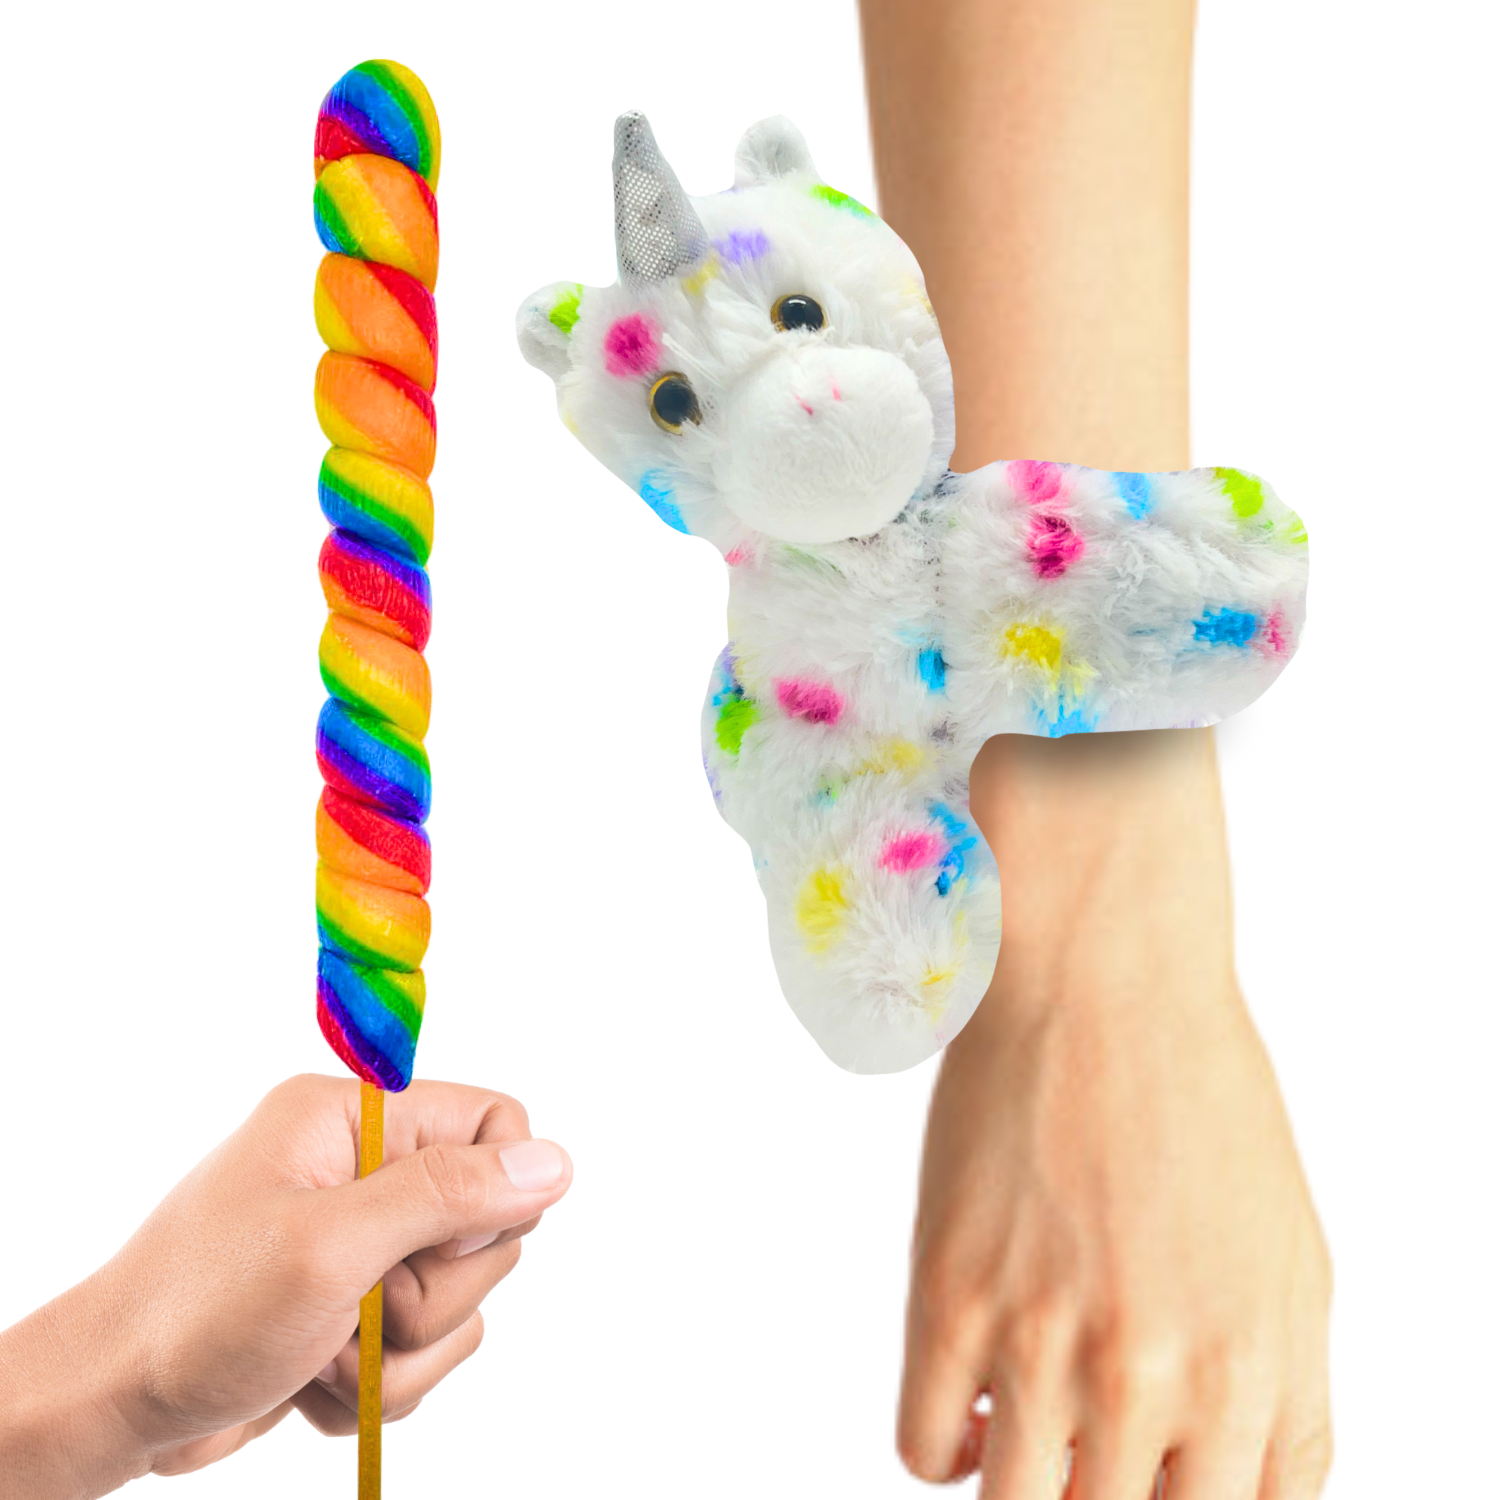 Unicorn Slap Bracelet With Lollipop